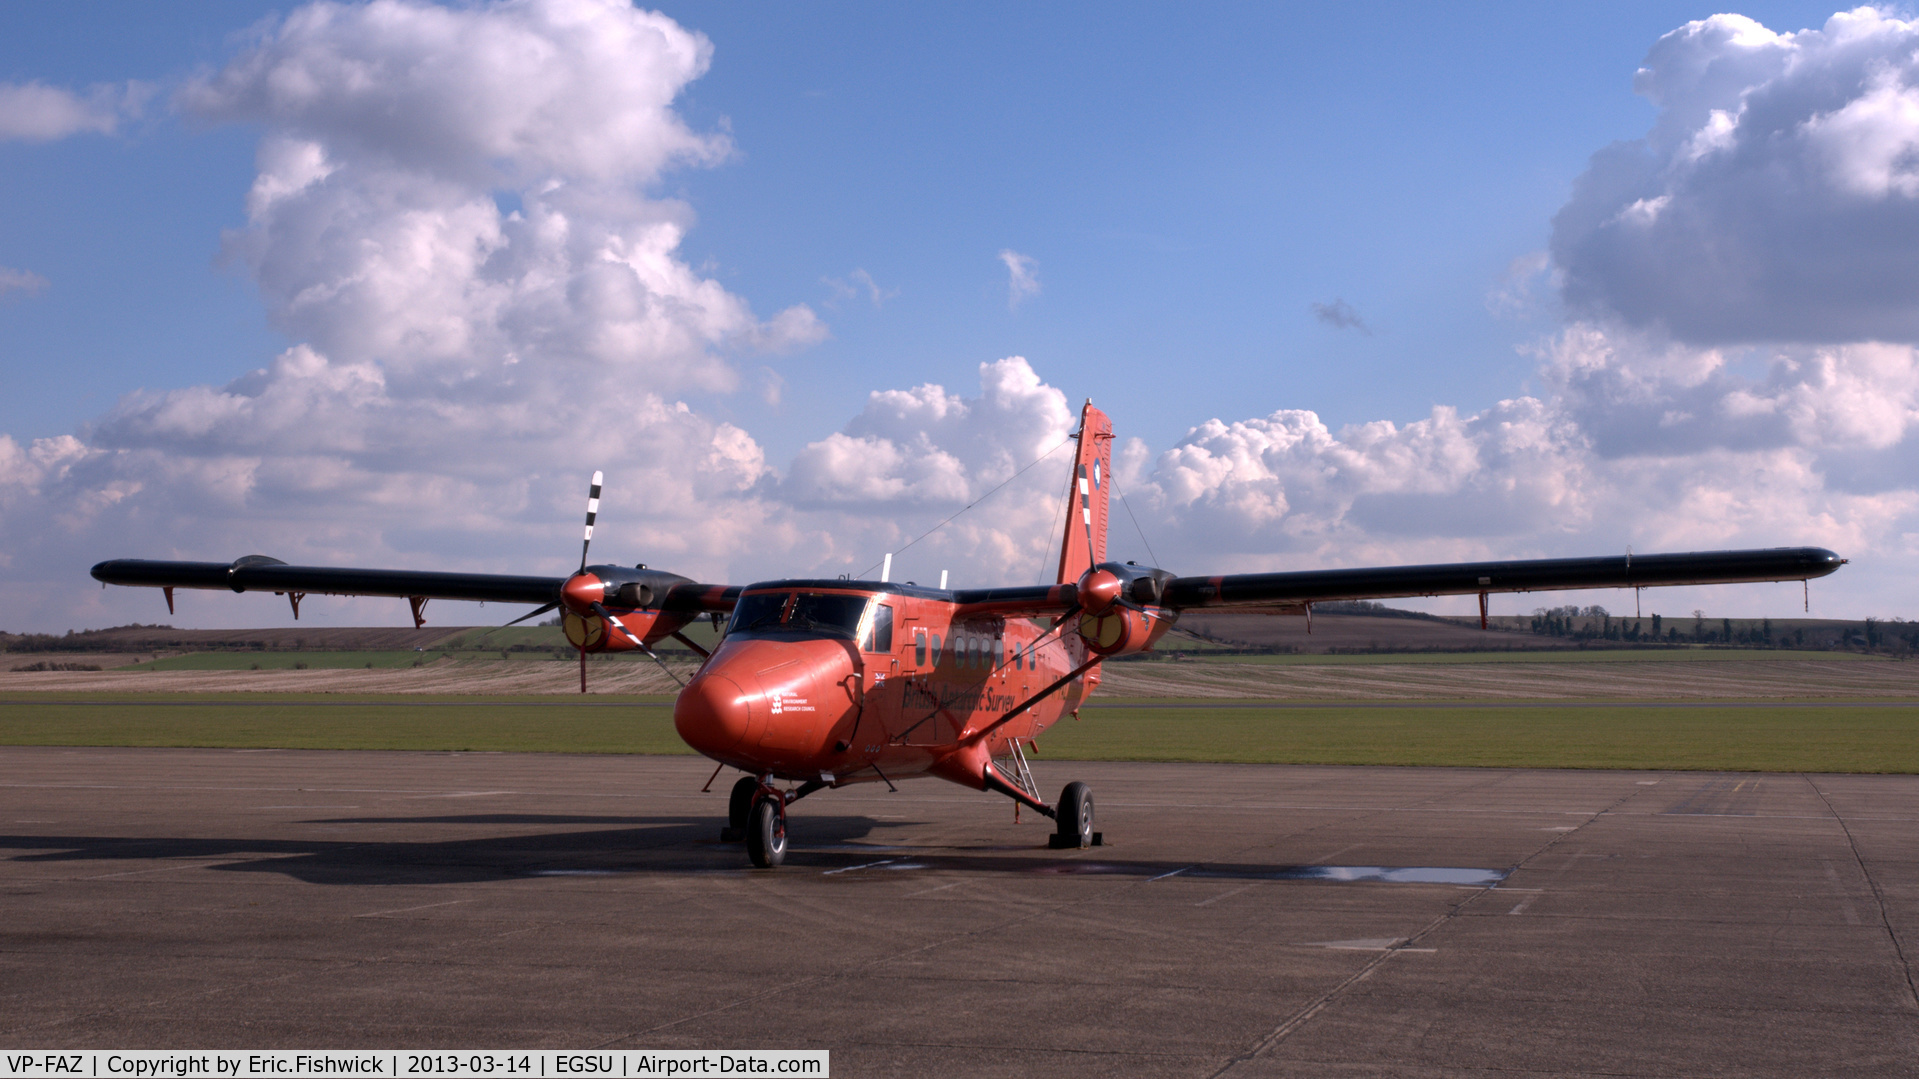 VP-FAZ, 1981 De Havilland Canada DHC-6-300 Twin Otter C/N 748, 3. 'Ice Cold Katy' visiting Duxford Airfield.